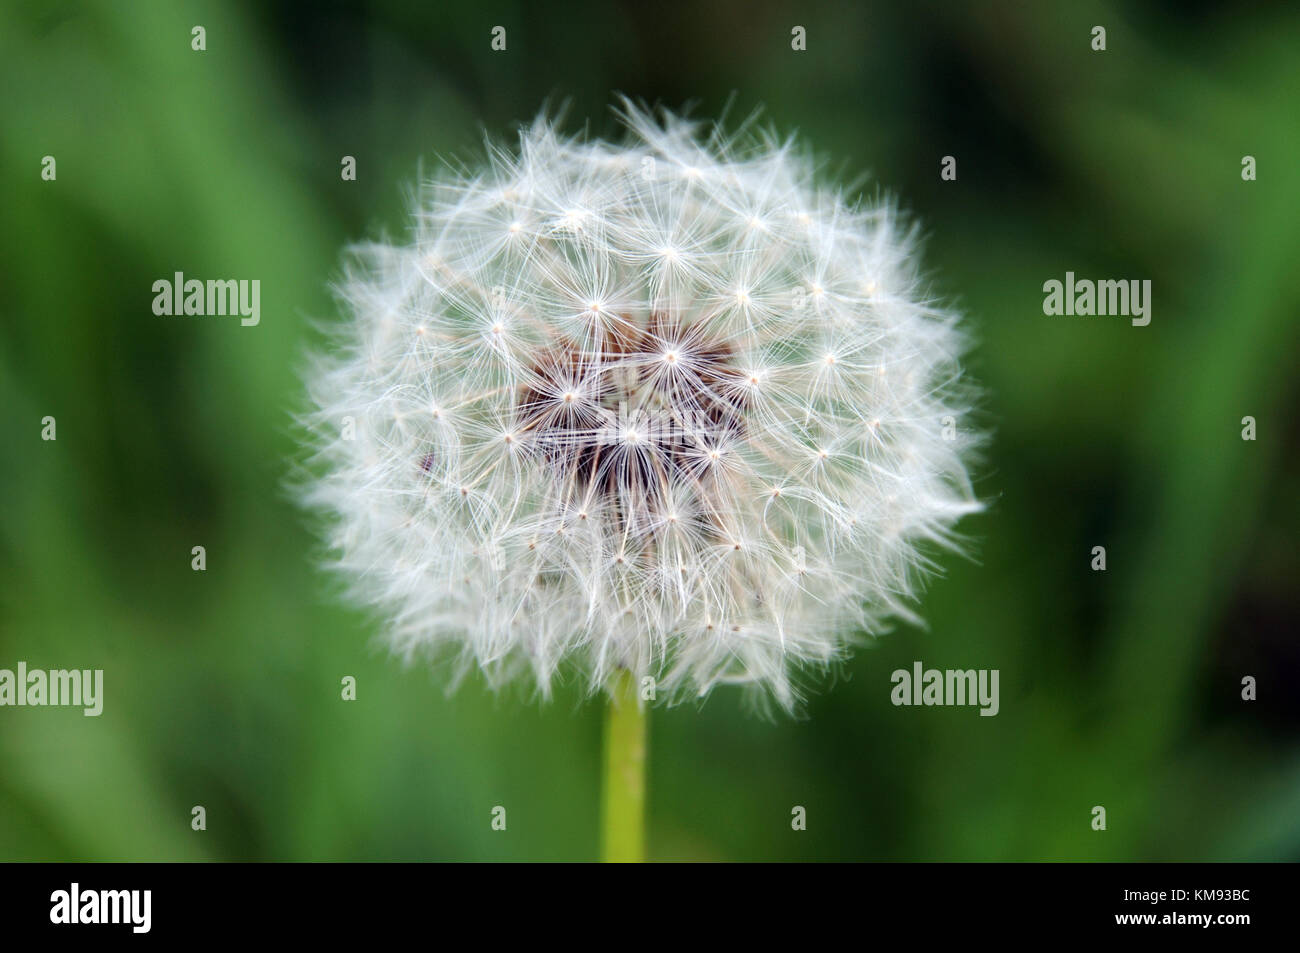 seed head of a dandelion Stock Photo